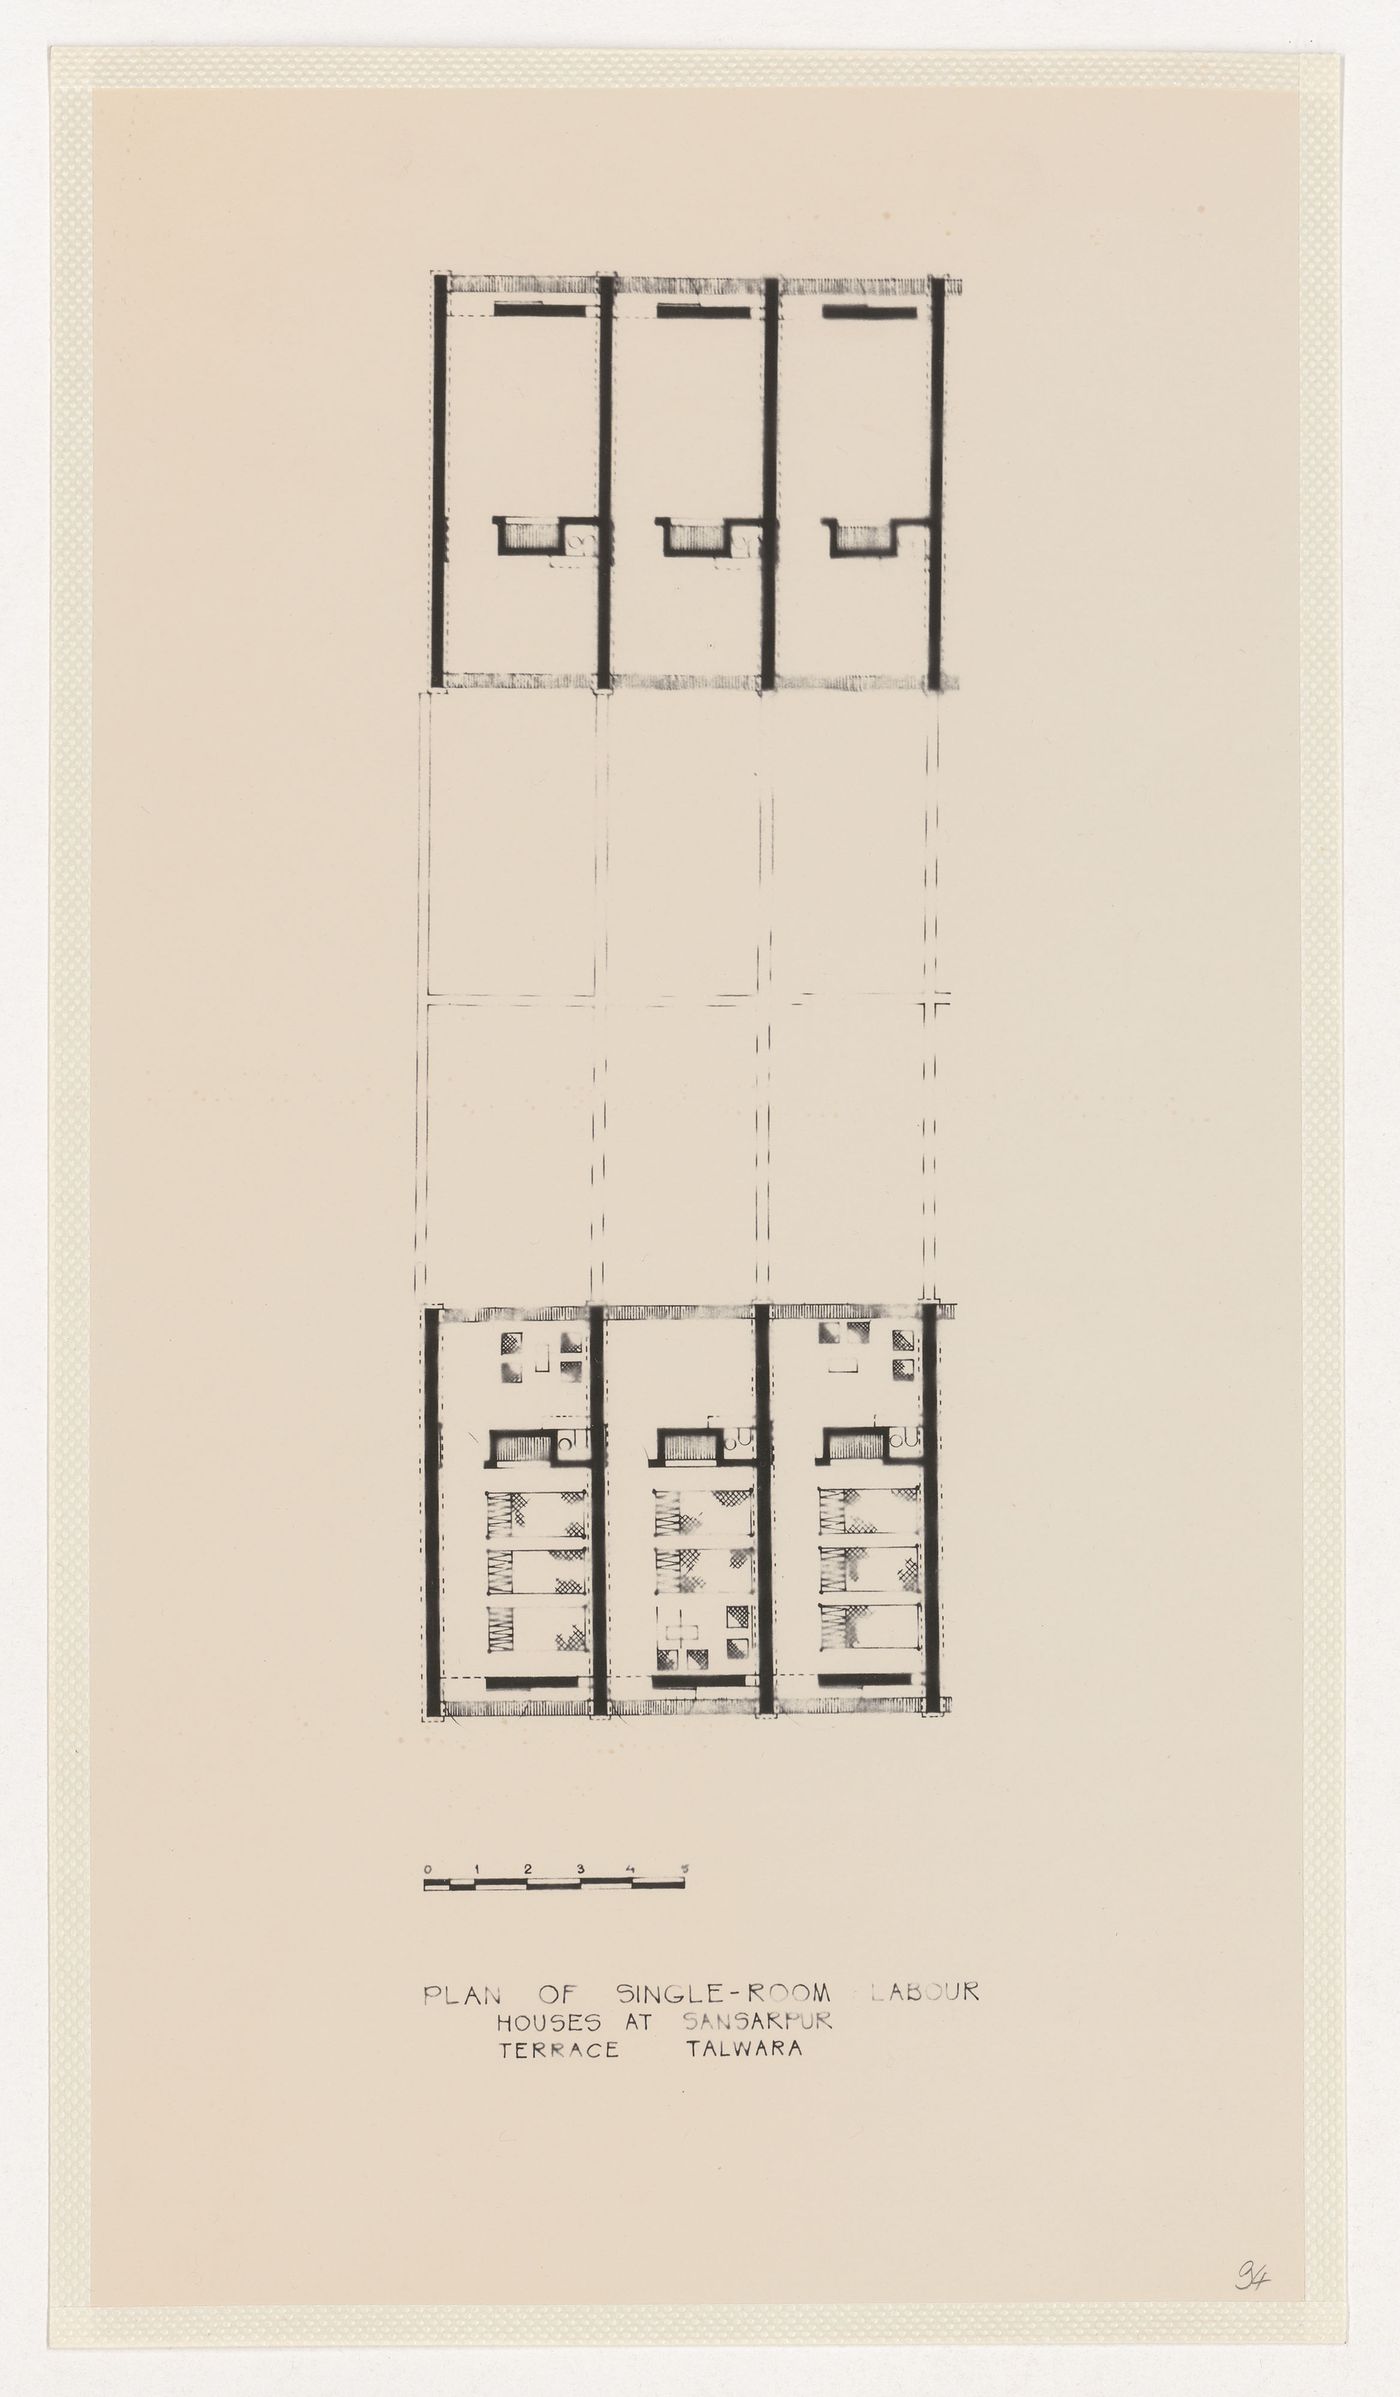 Plan for Single-room labour houses, Sansarpur Terrace, Talwara, India